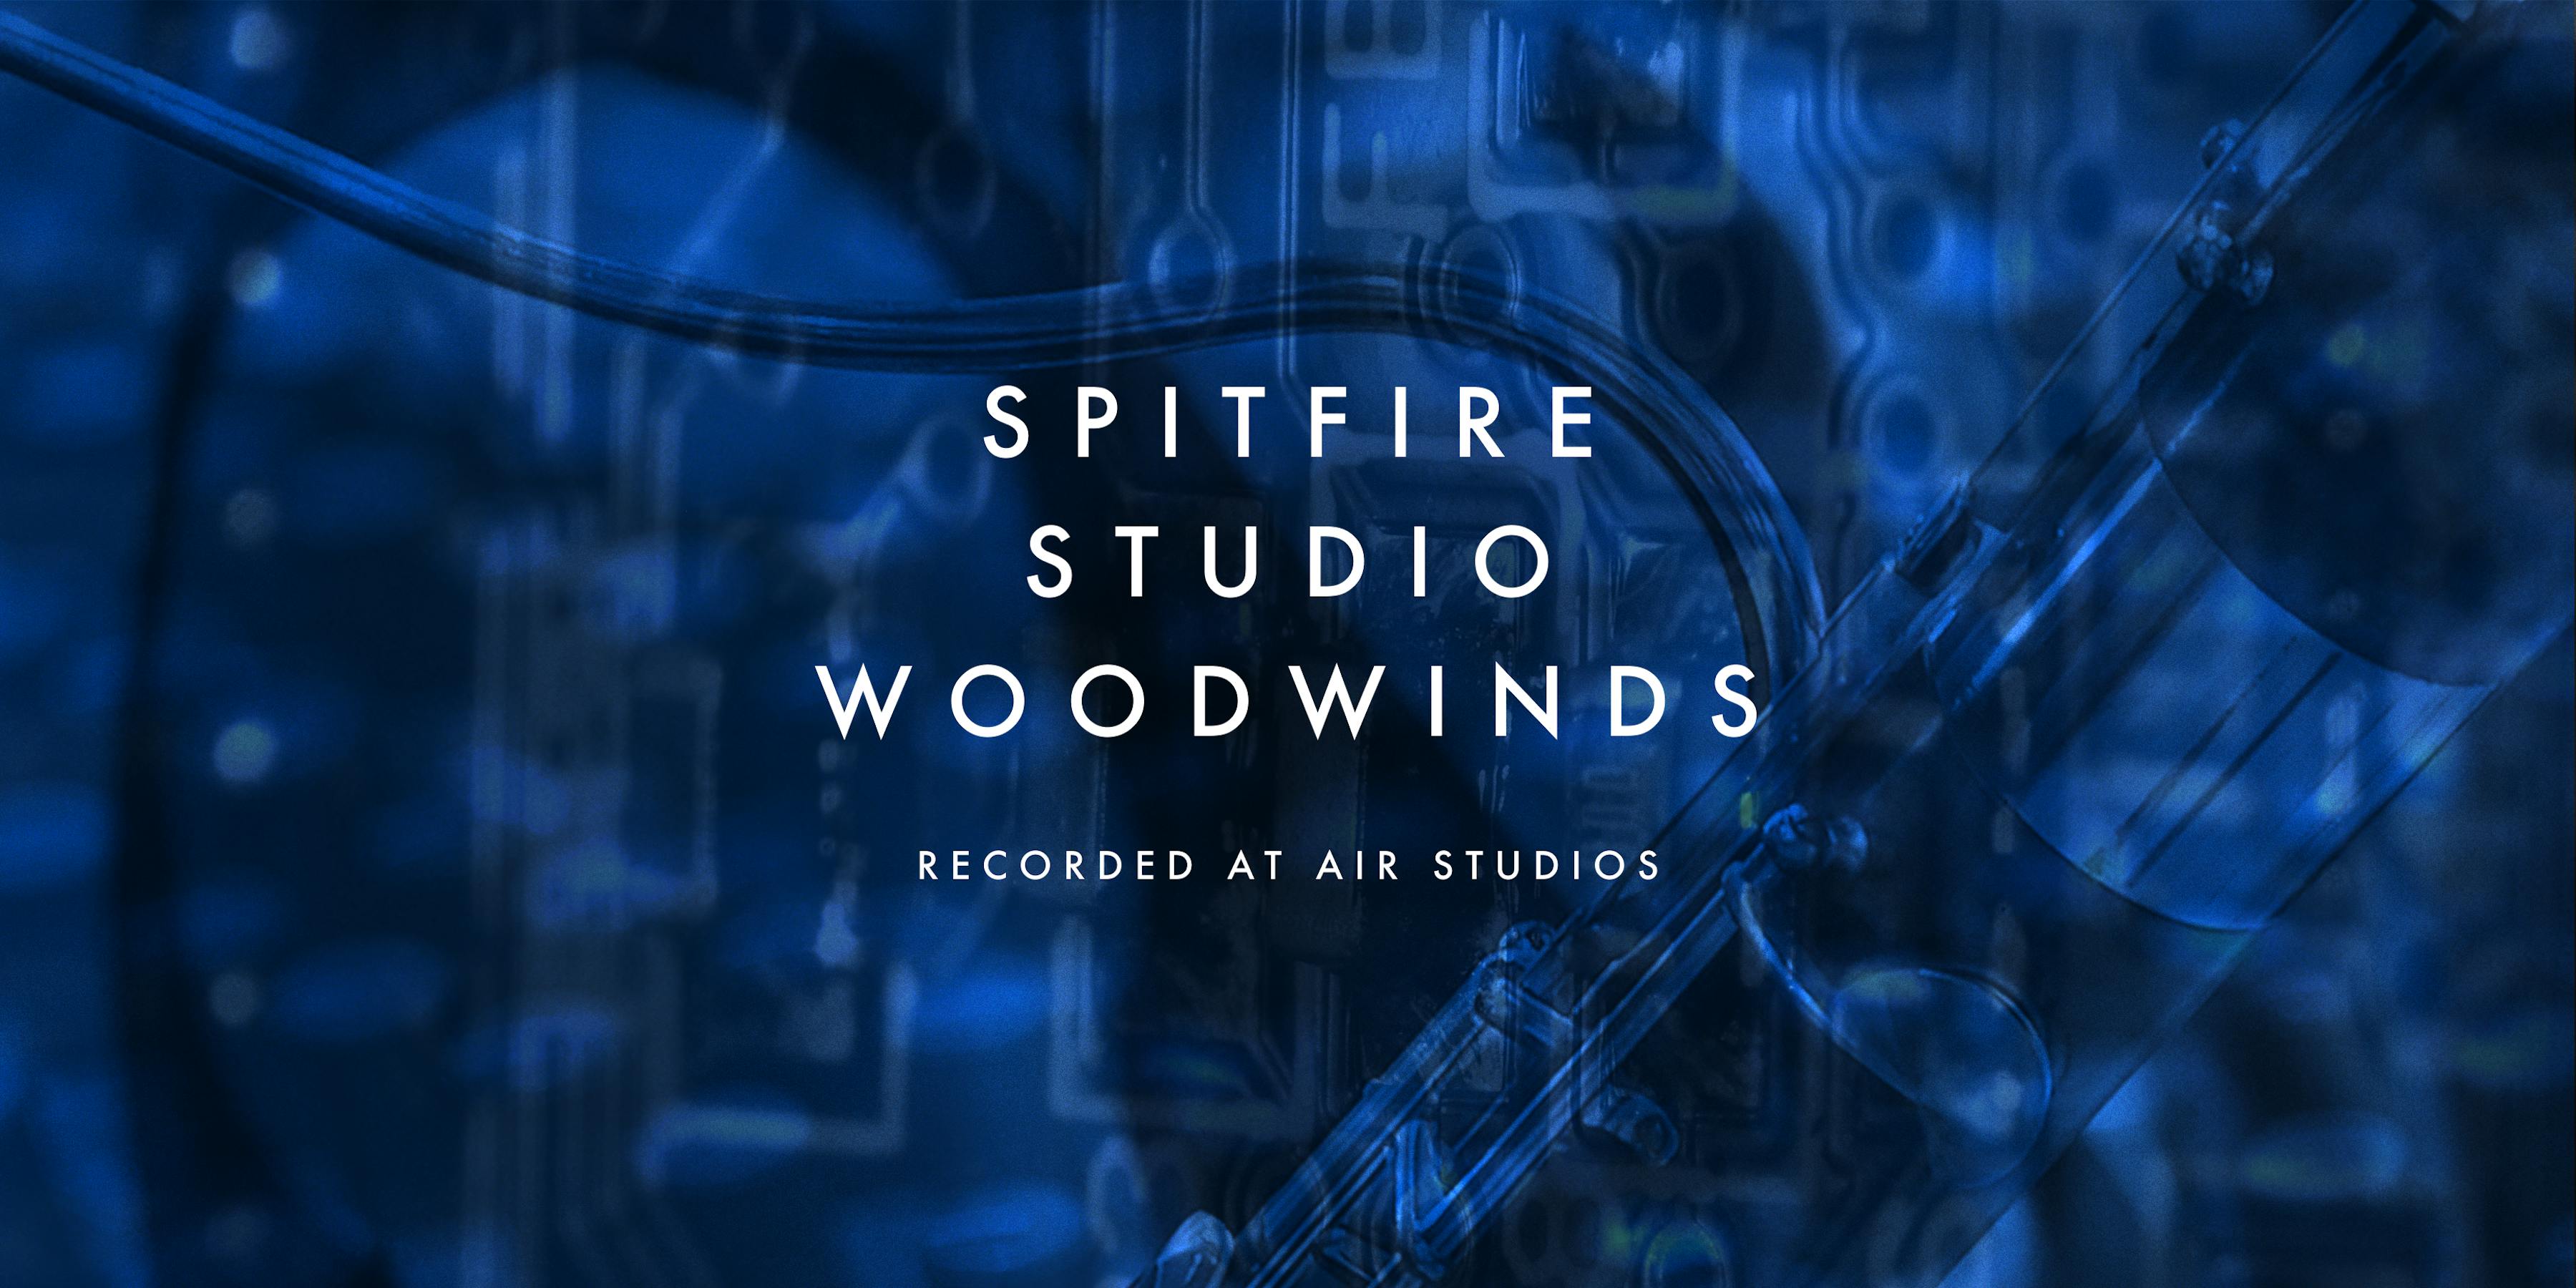 Tutustu 68+ imagen spitfire studio woodwinds